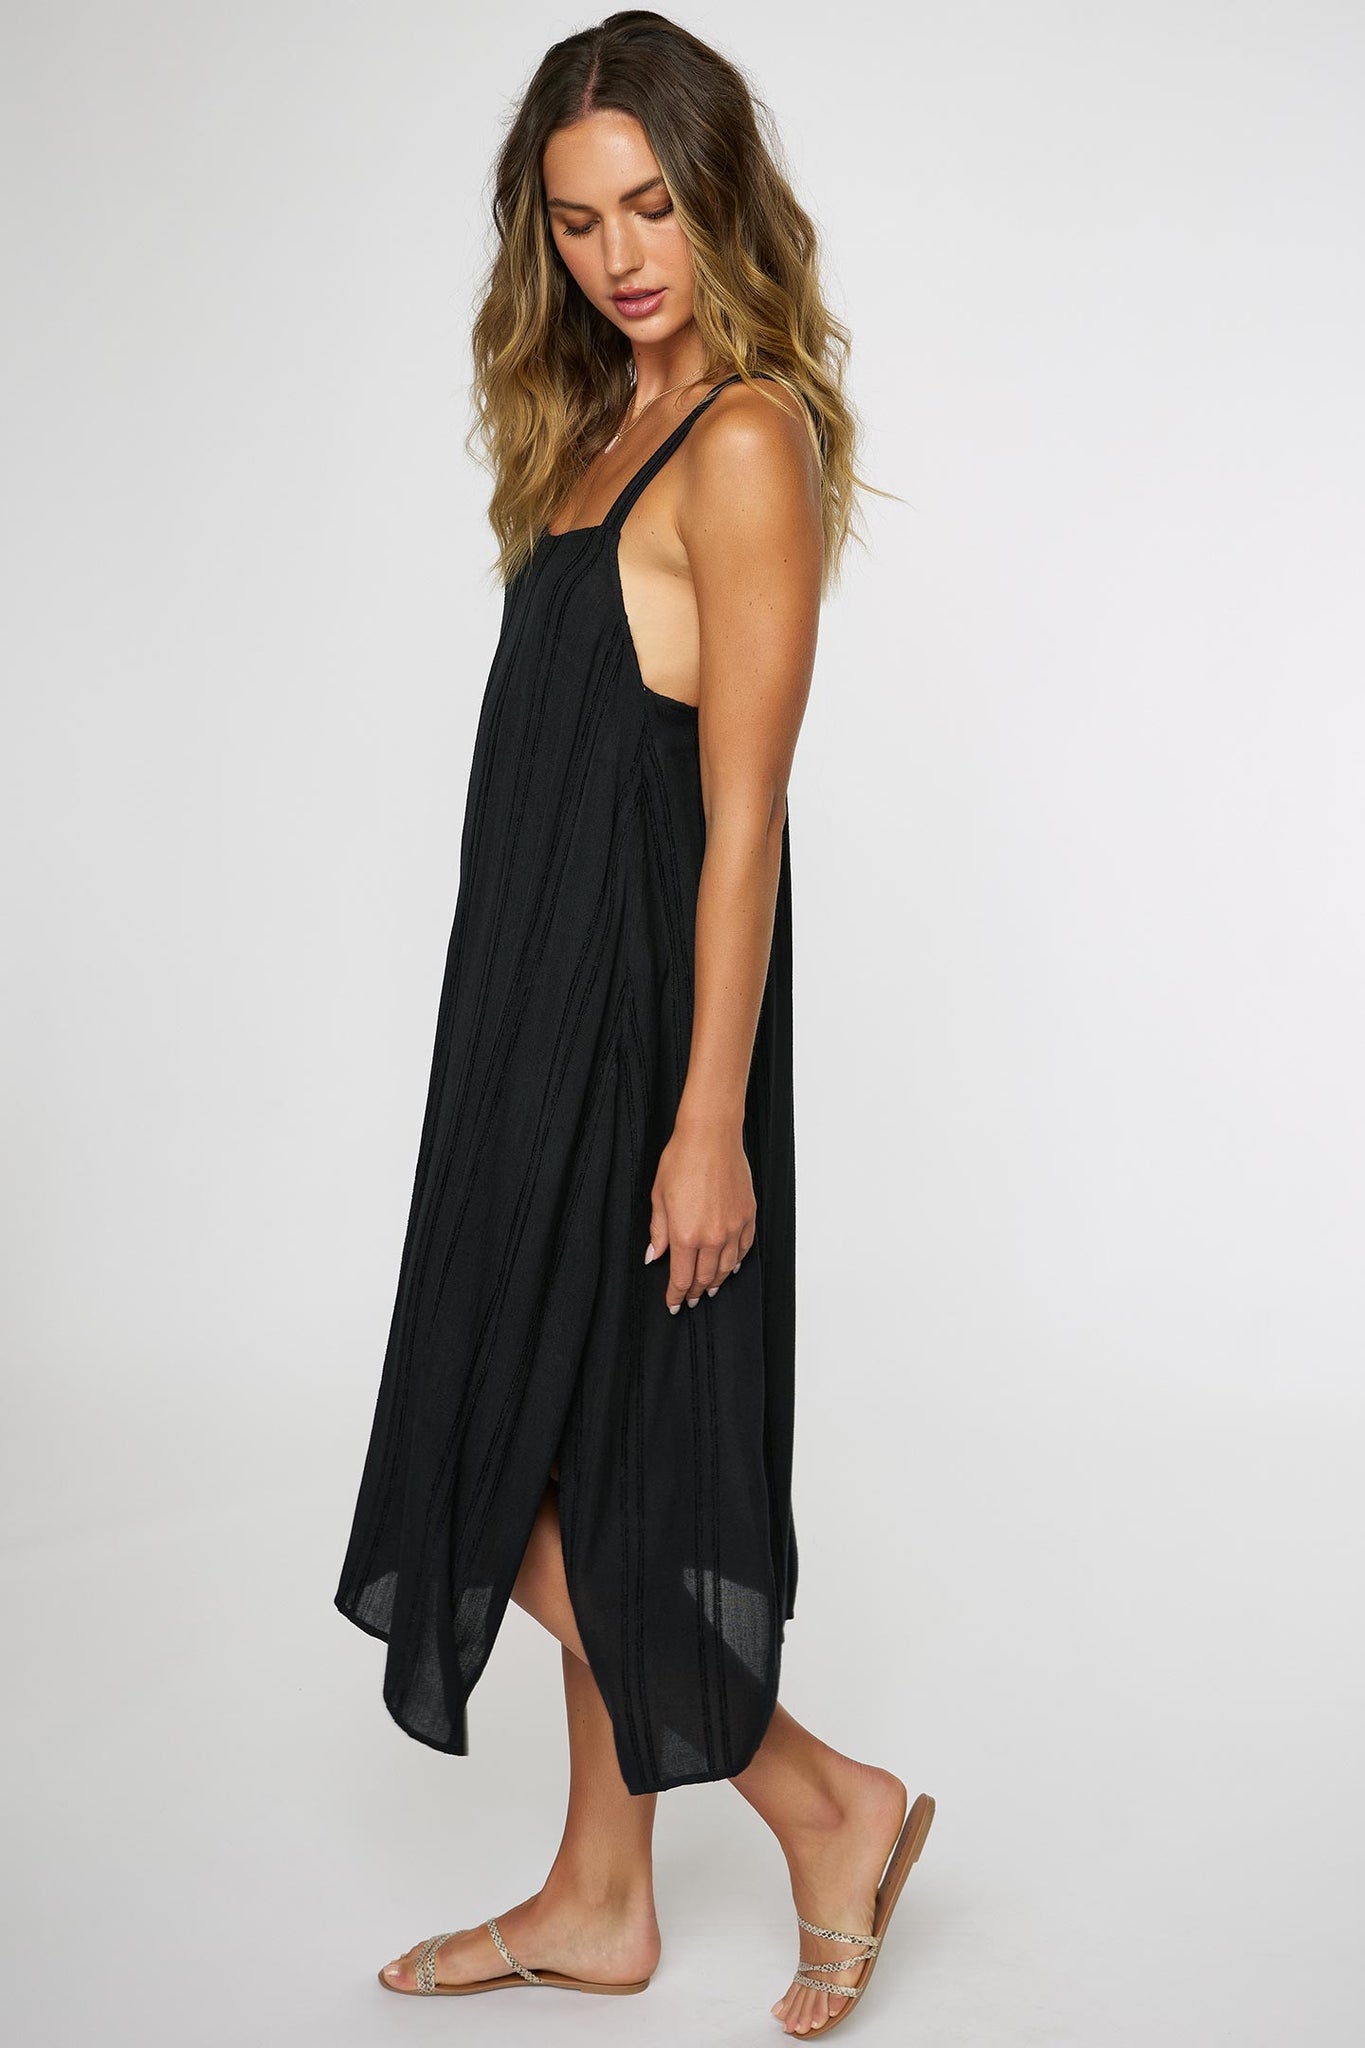 Saltwater Solids Miranda Dress Cover-Up - Black | O'Neill